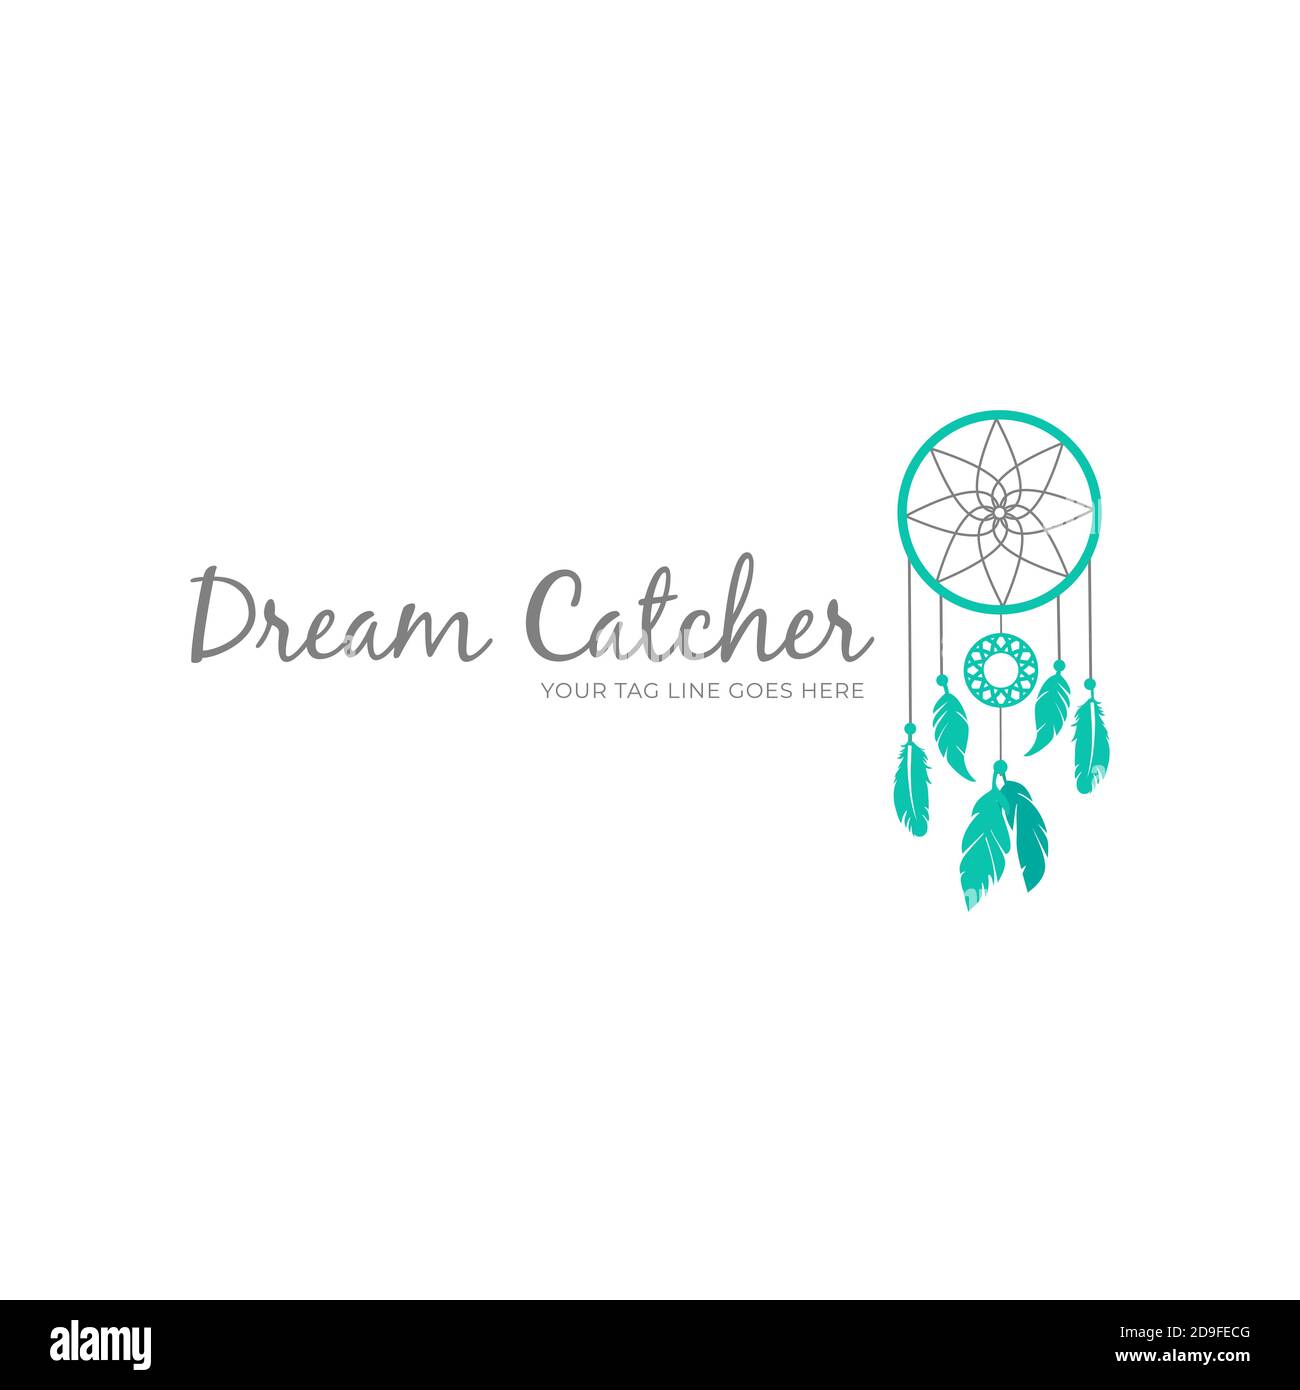 Dream Catcher Logo Design Template Stock Vector Image And Art Alamy